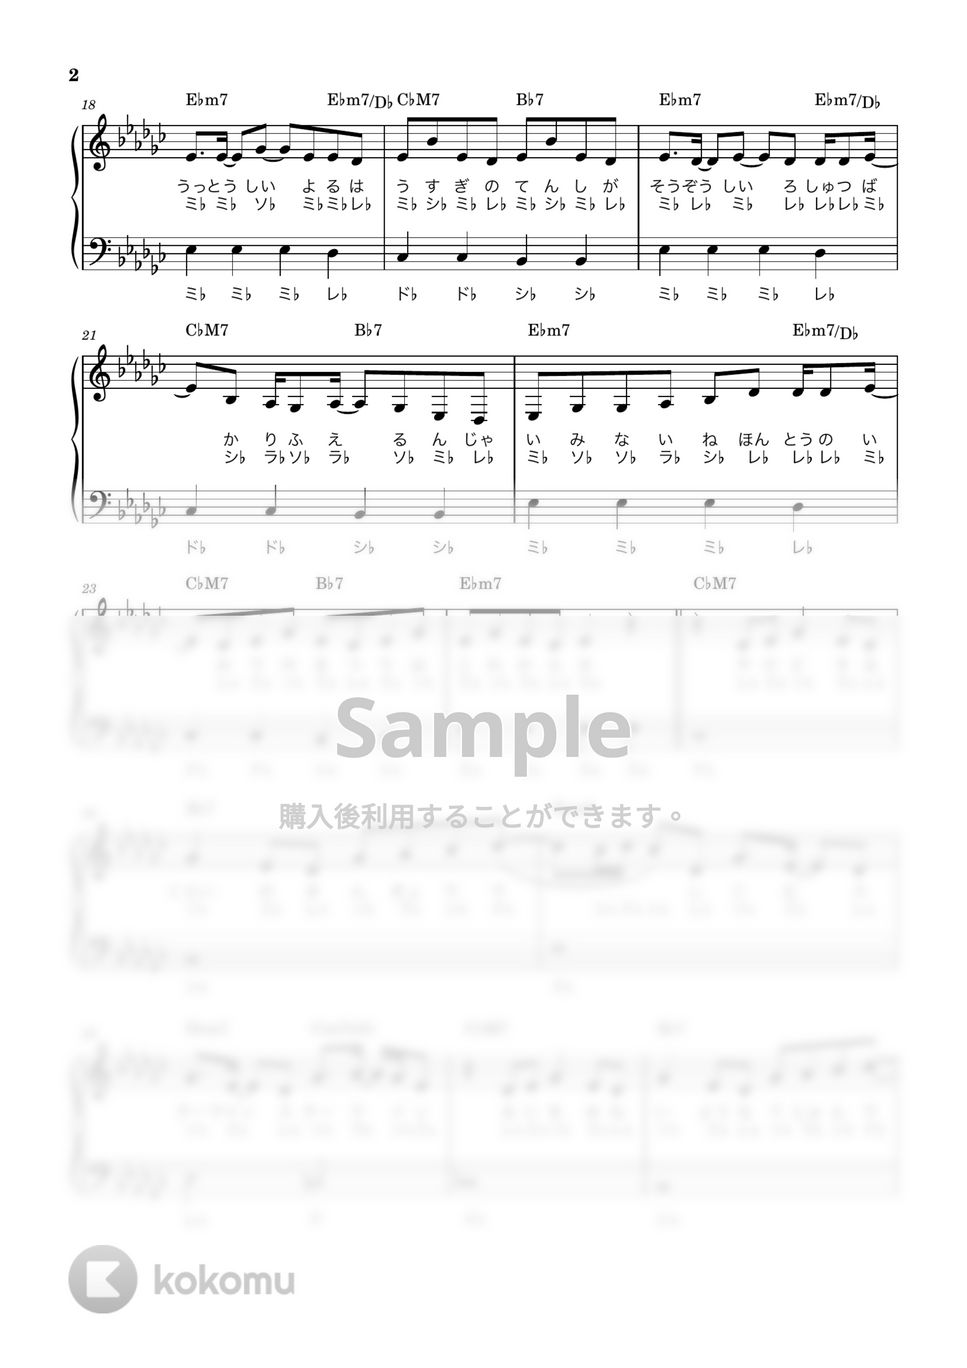 Da-iCE - スターマイン (かんたん / 歌詞付き / ドレミ付き / 初心者) by piano.tokyo